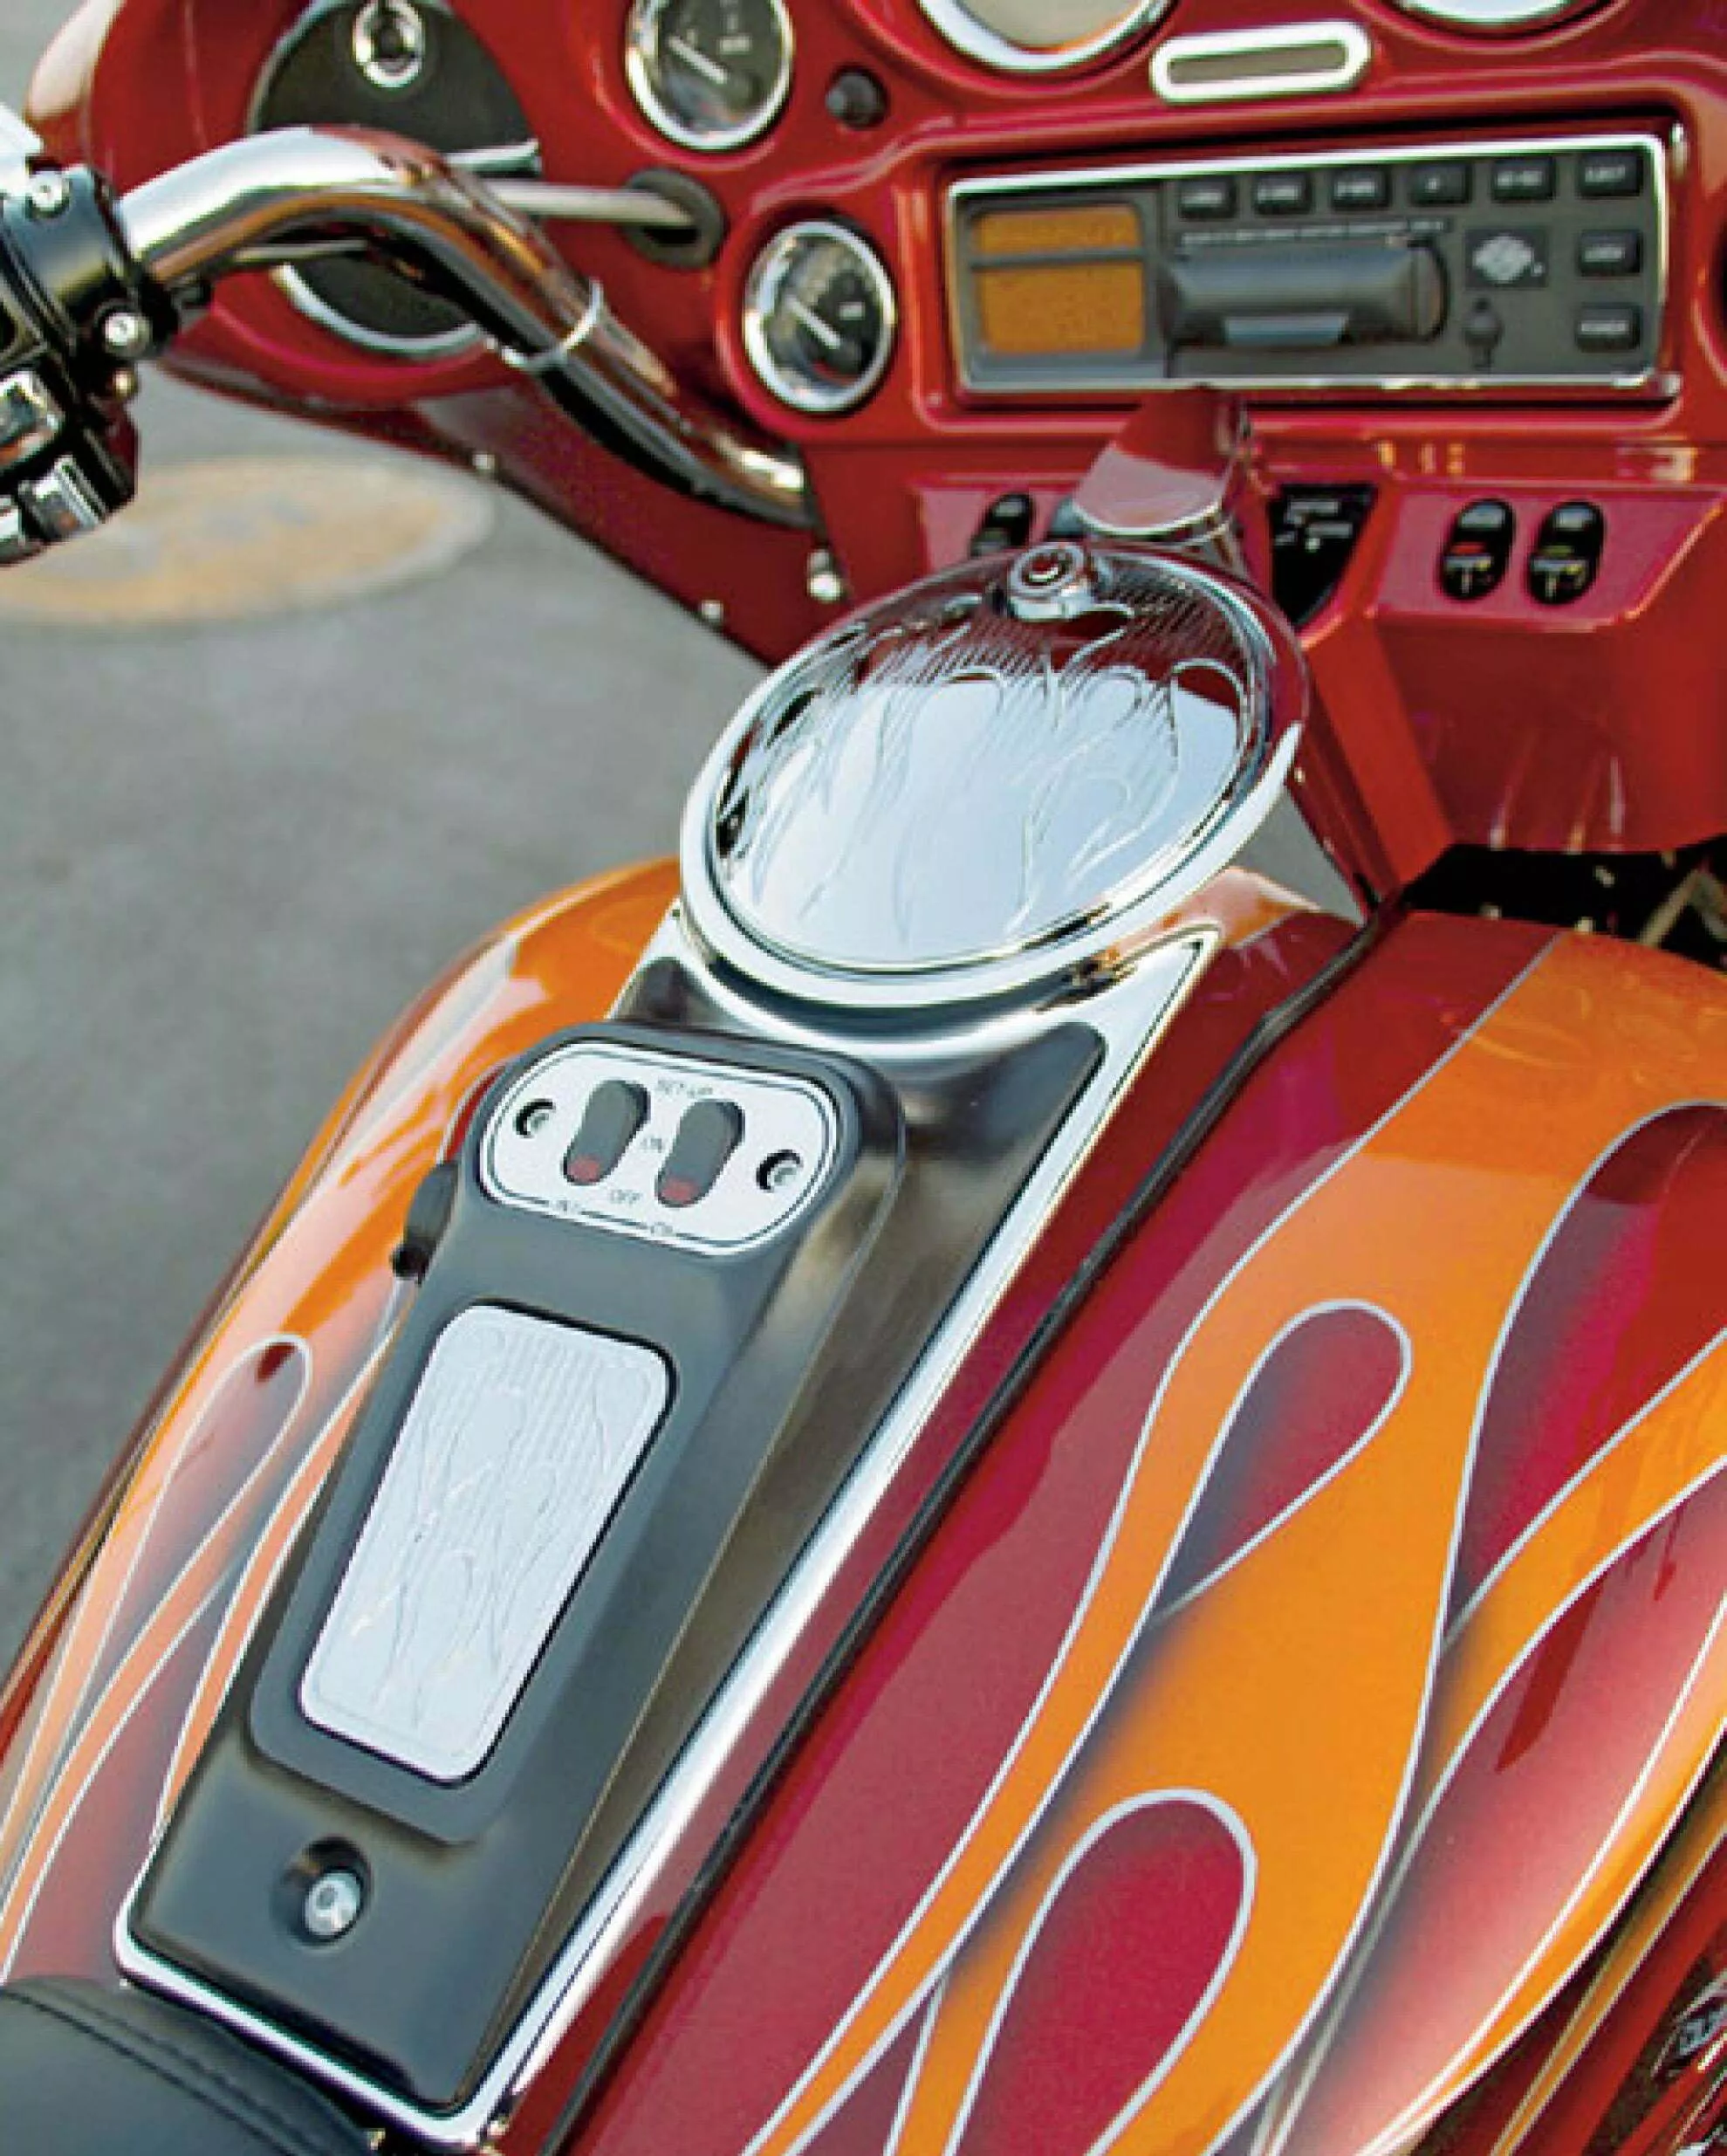 2002 Harley Electra Glide